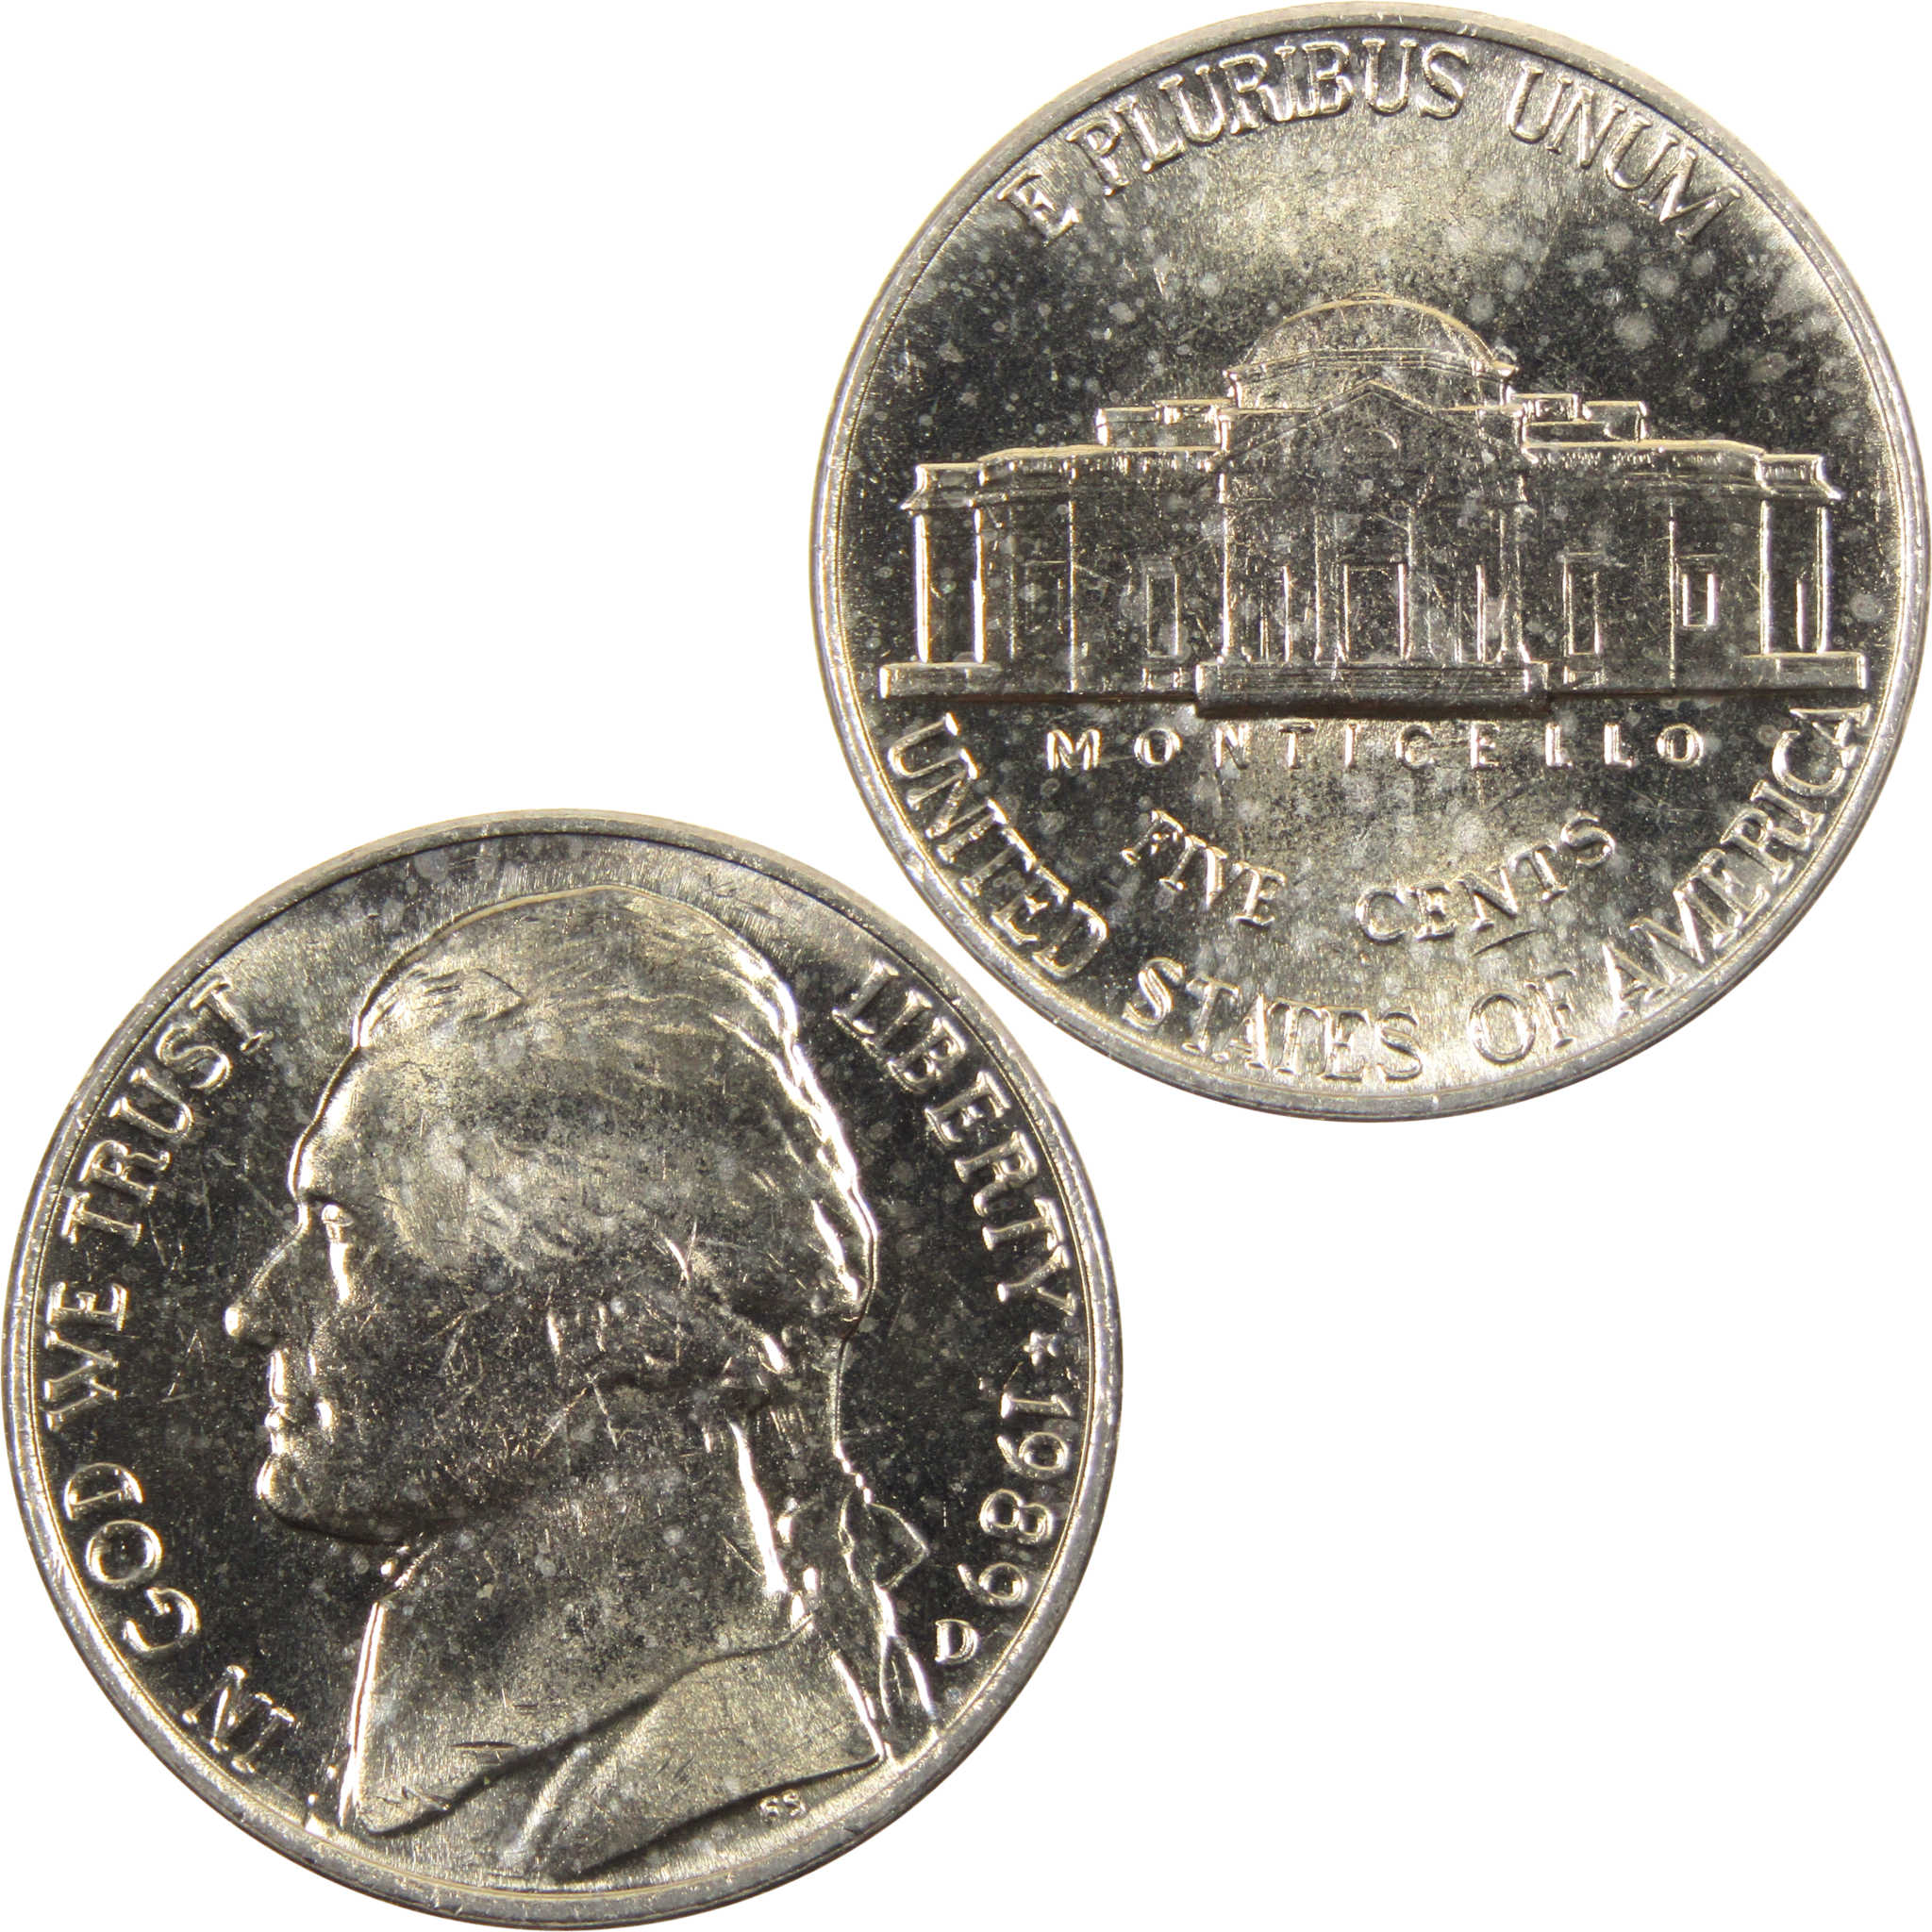 1989 D Jefferson Nickel BU Uncirculated 5c Coin